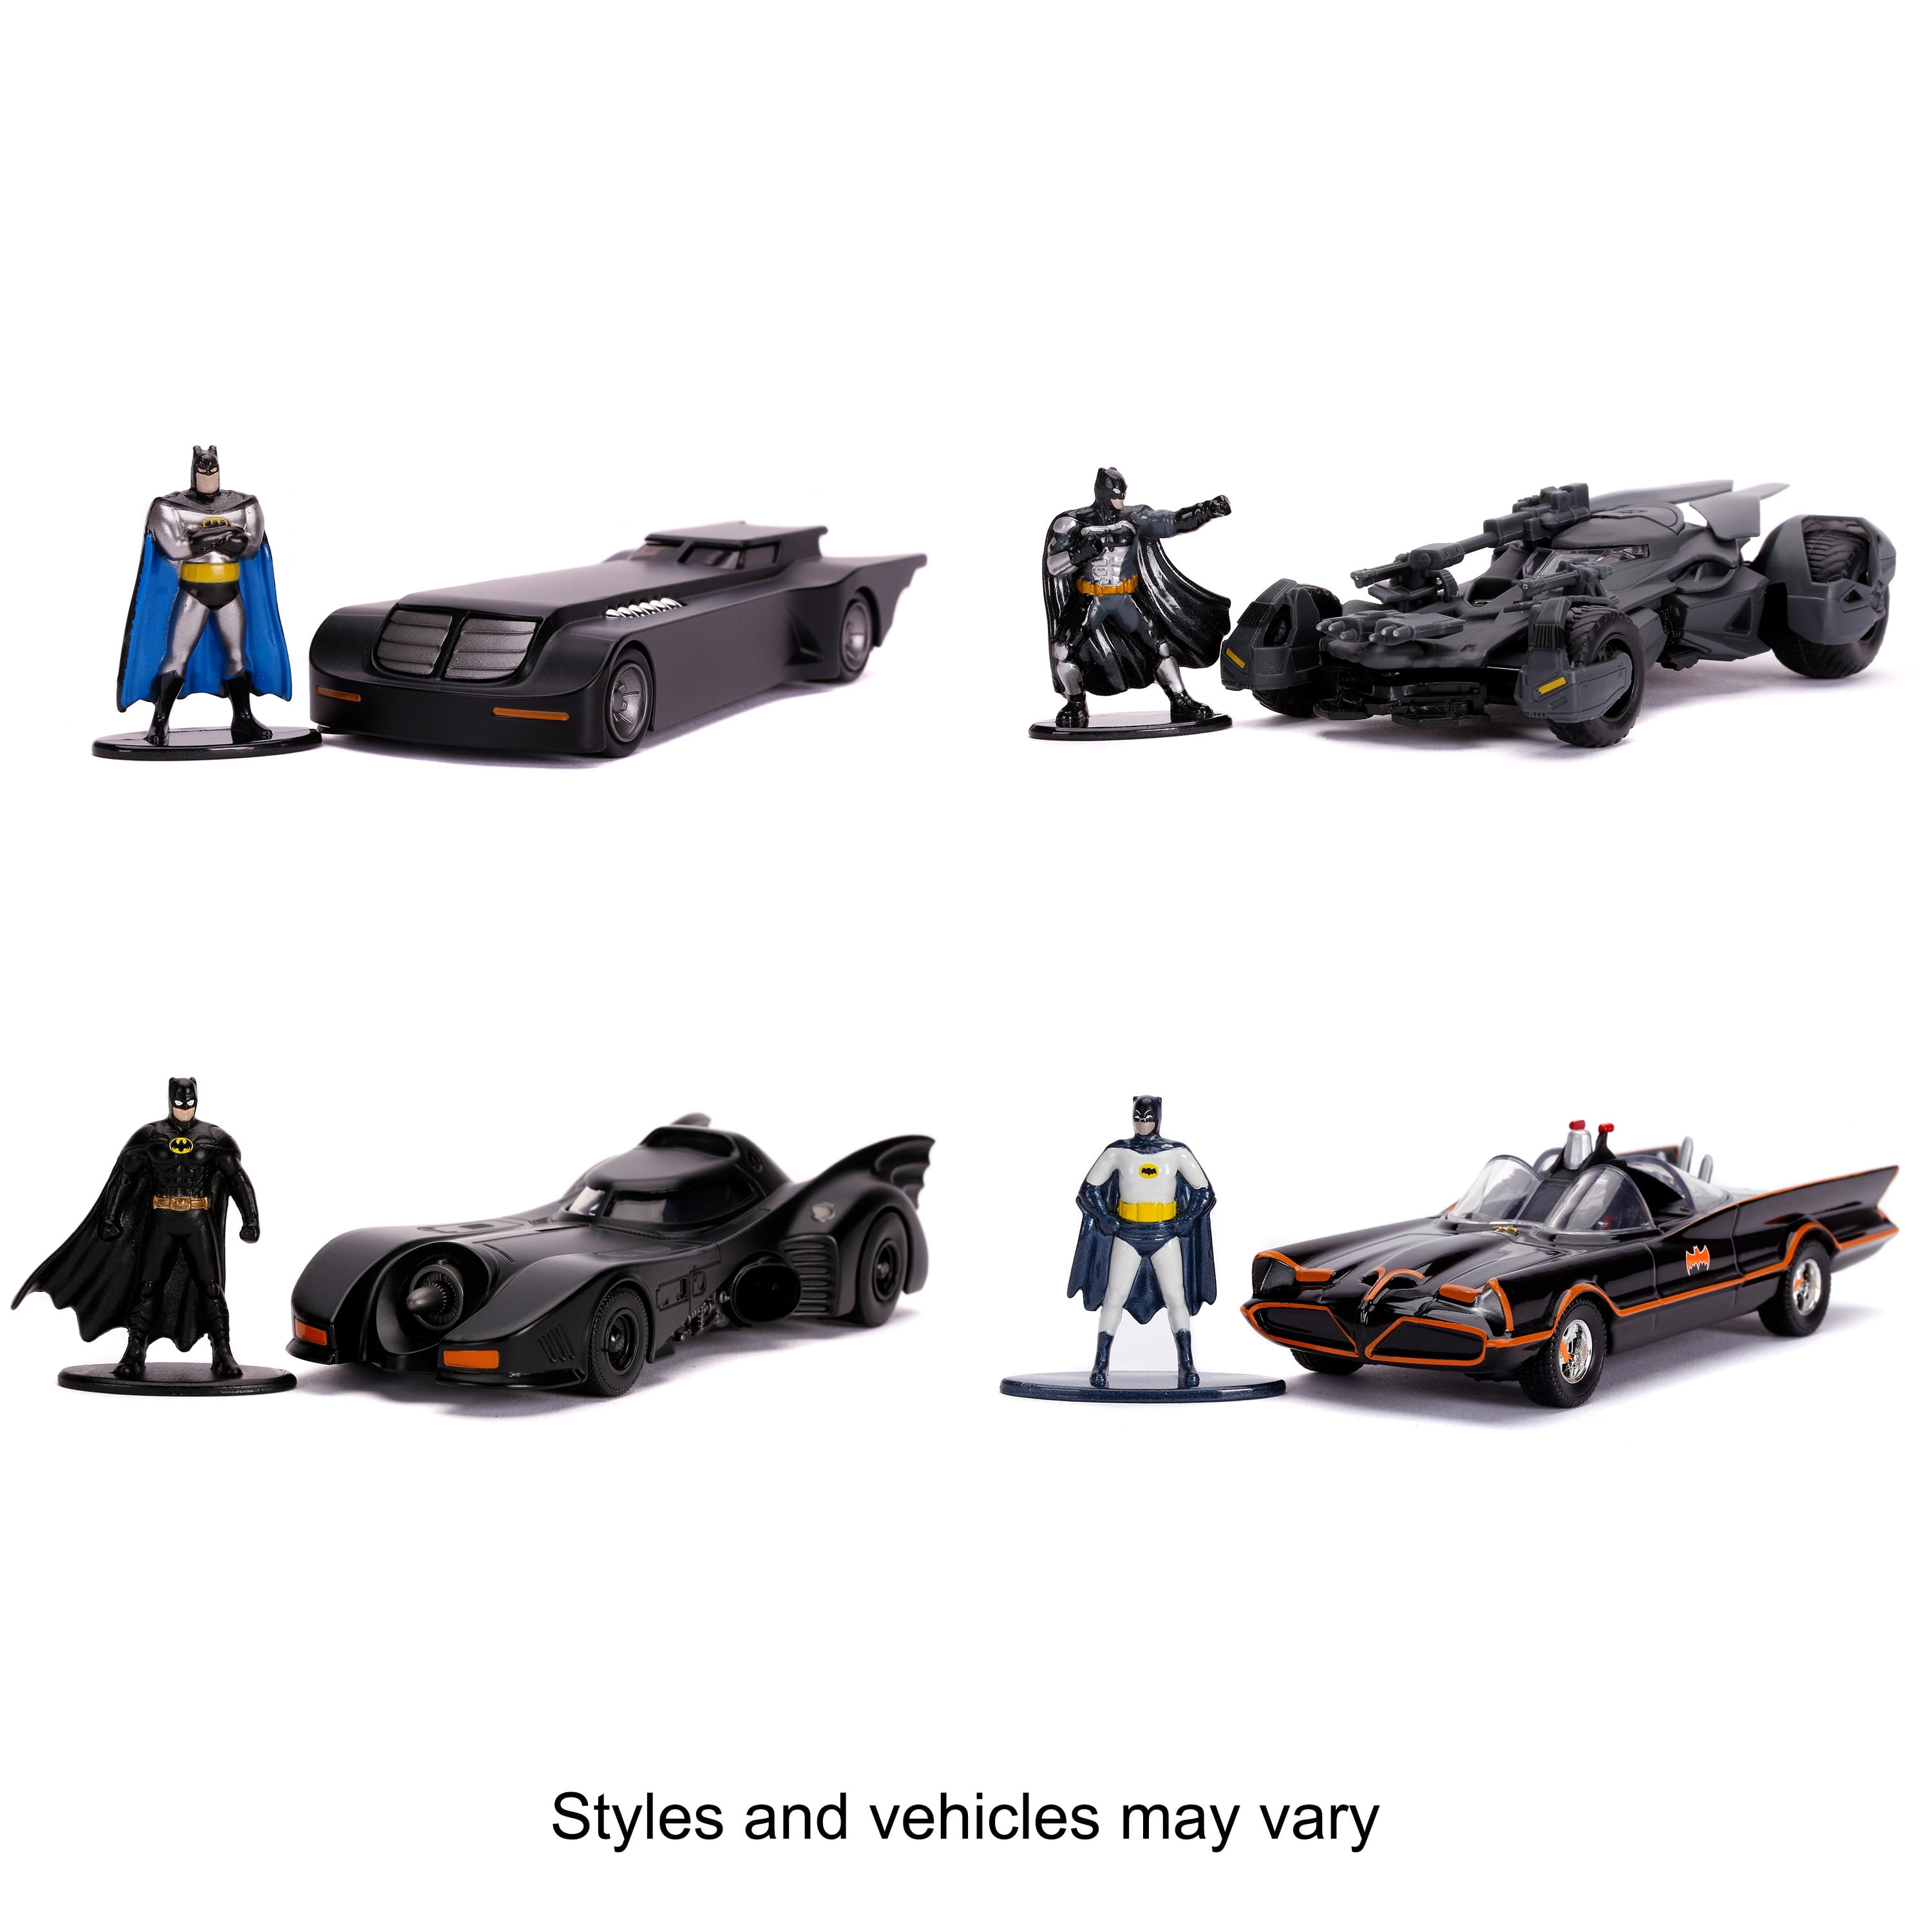 DIECAST PLASTIC MODEL Batman Batmobile CLEAR CUT & PEEL STICKERS 1/32 SLOT CAR 